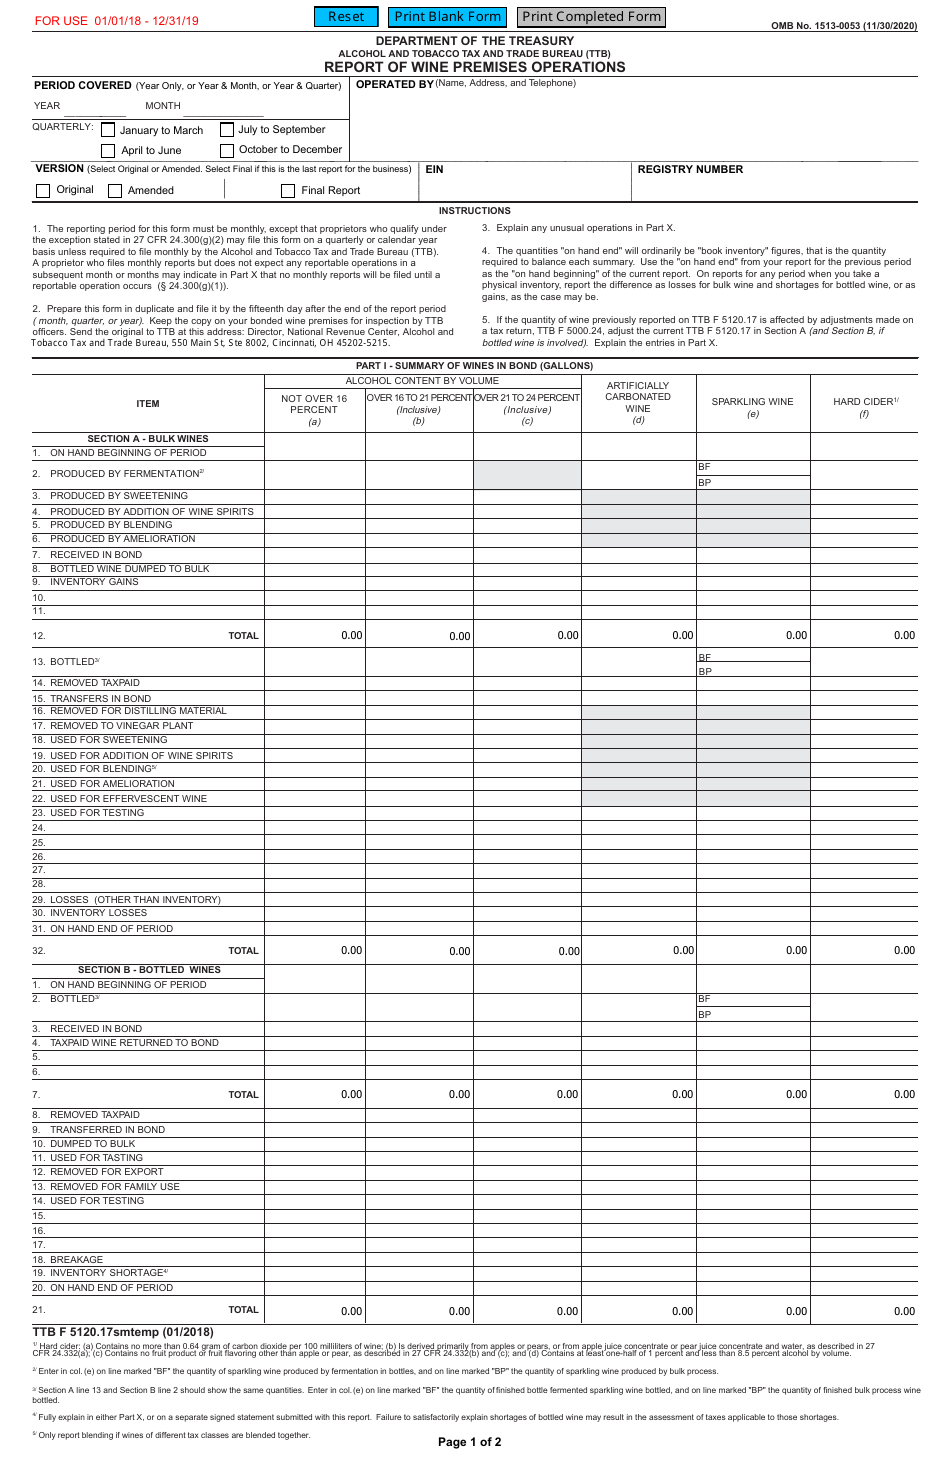 TTB Form 5120.17SMTEMP Report of Wine Premises Operations, Page 1